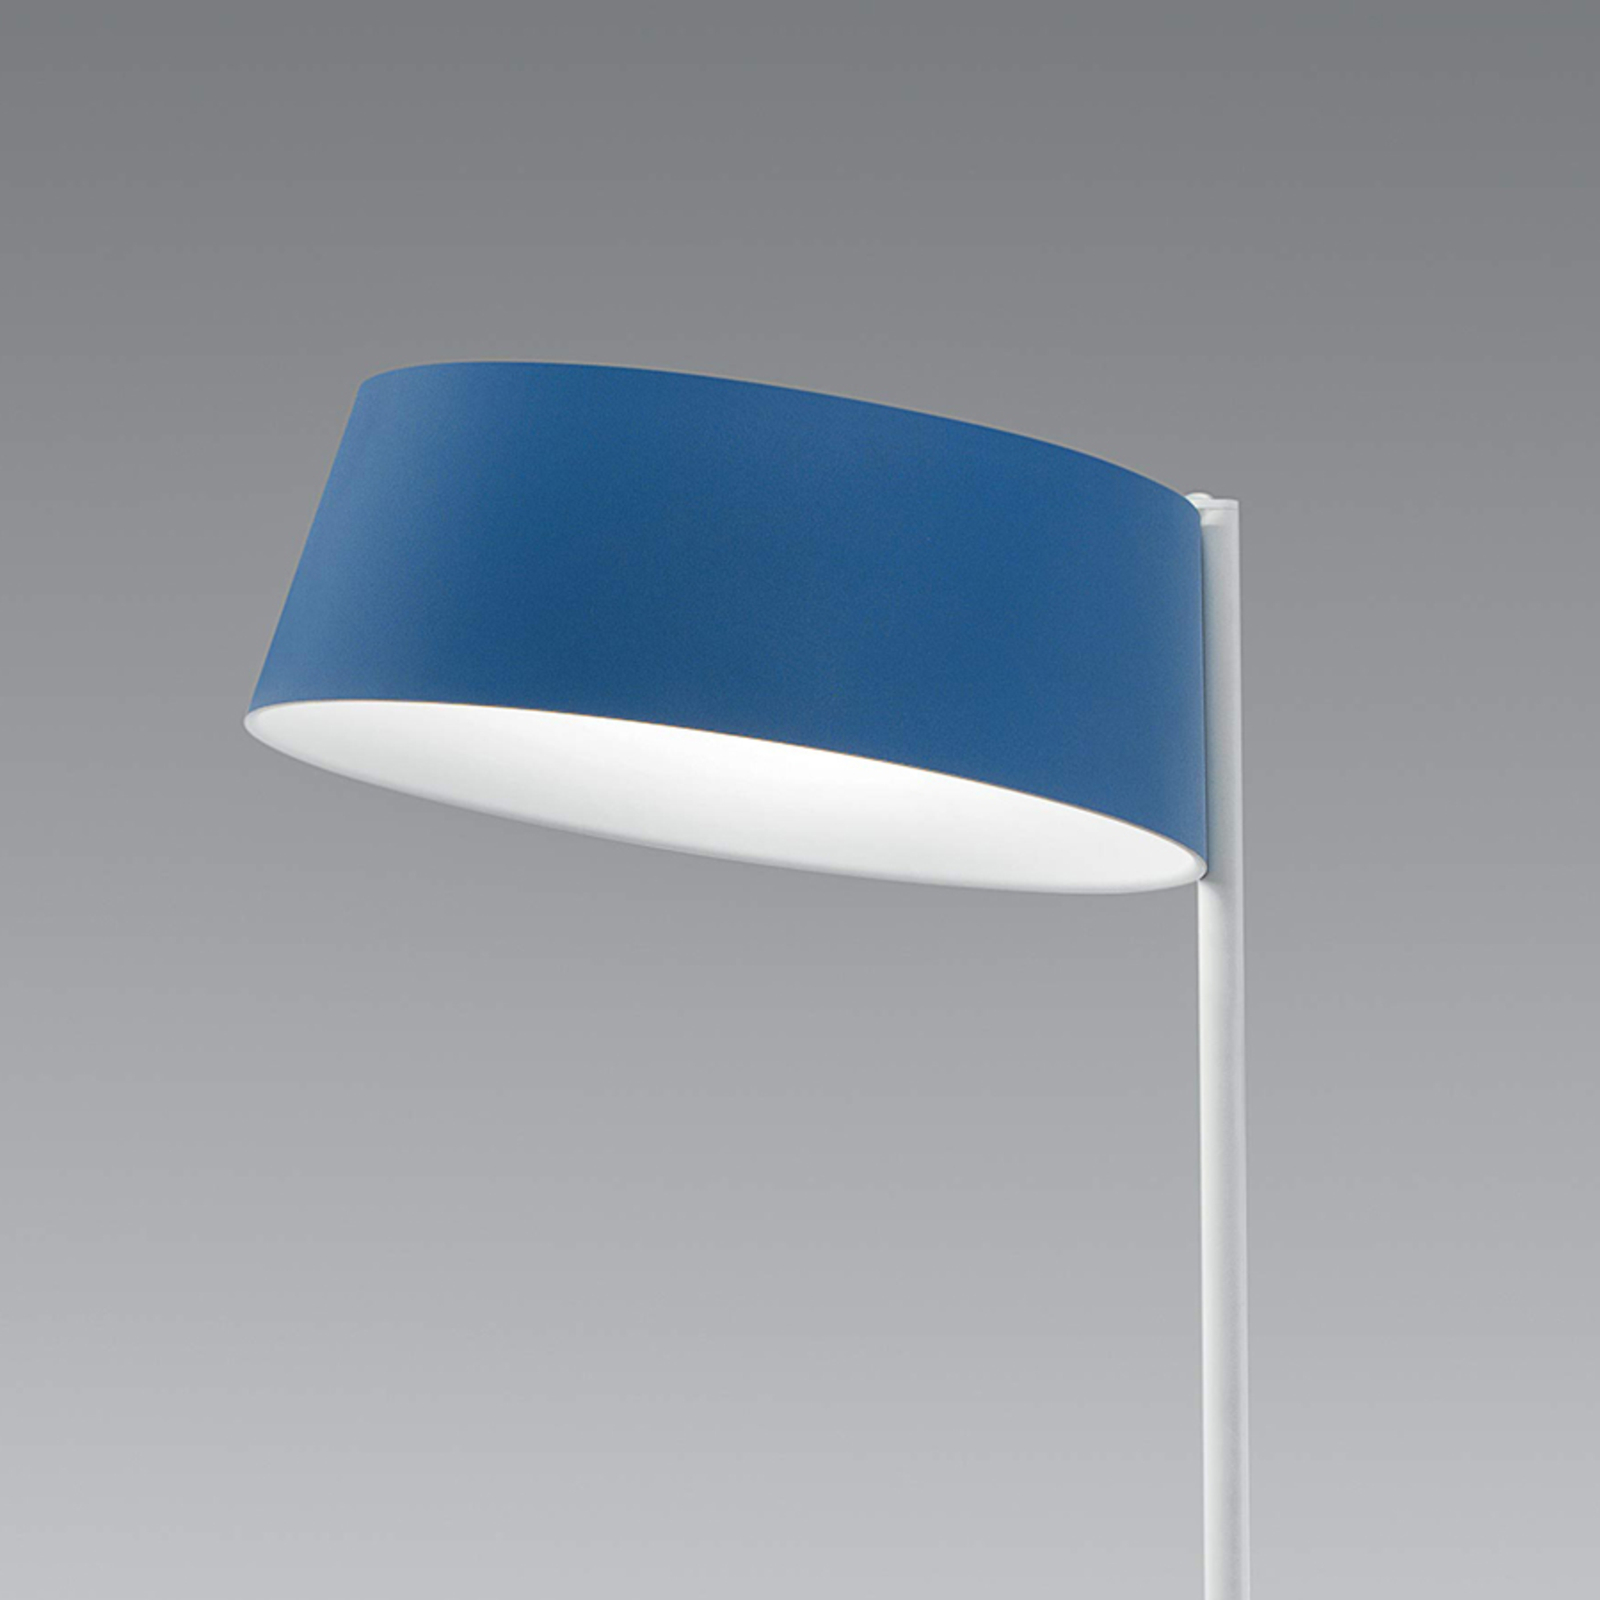 In azuurblauw ontworpen LED vloerlamp Oxygen_FL2